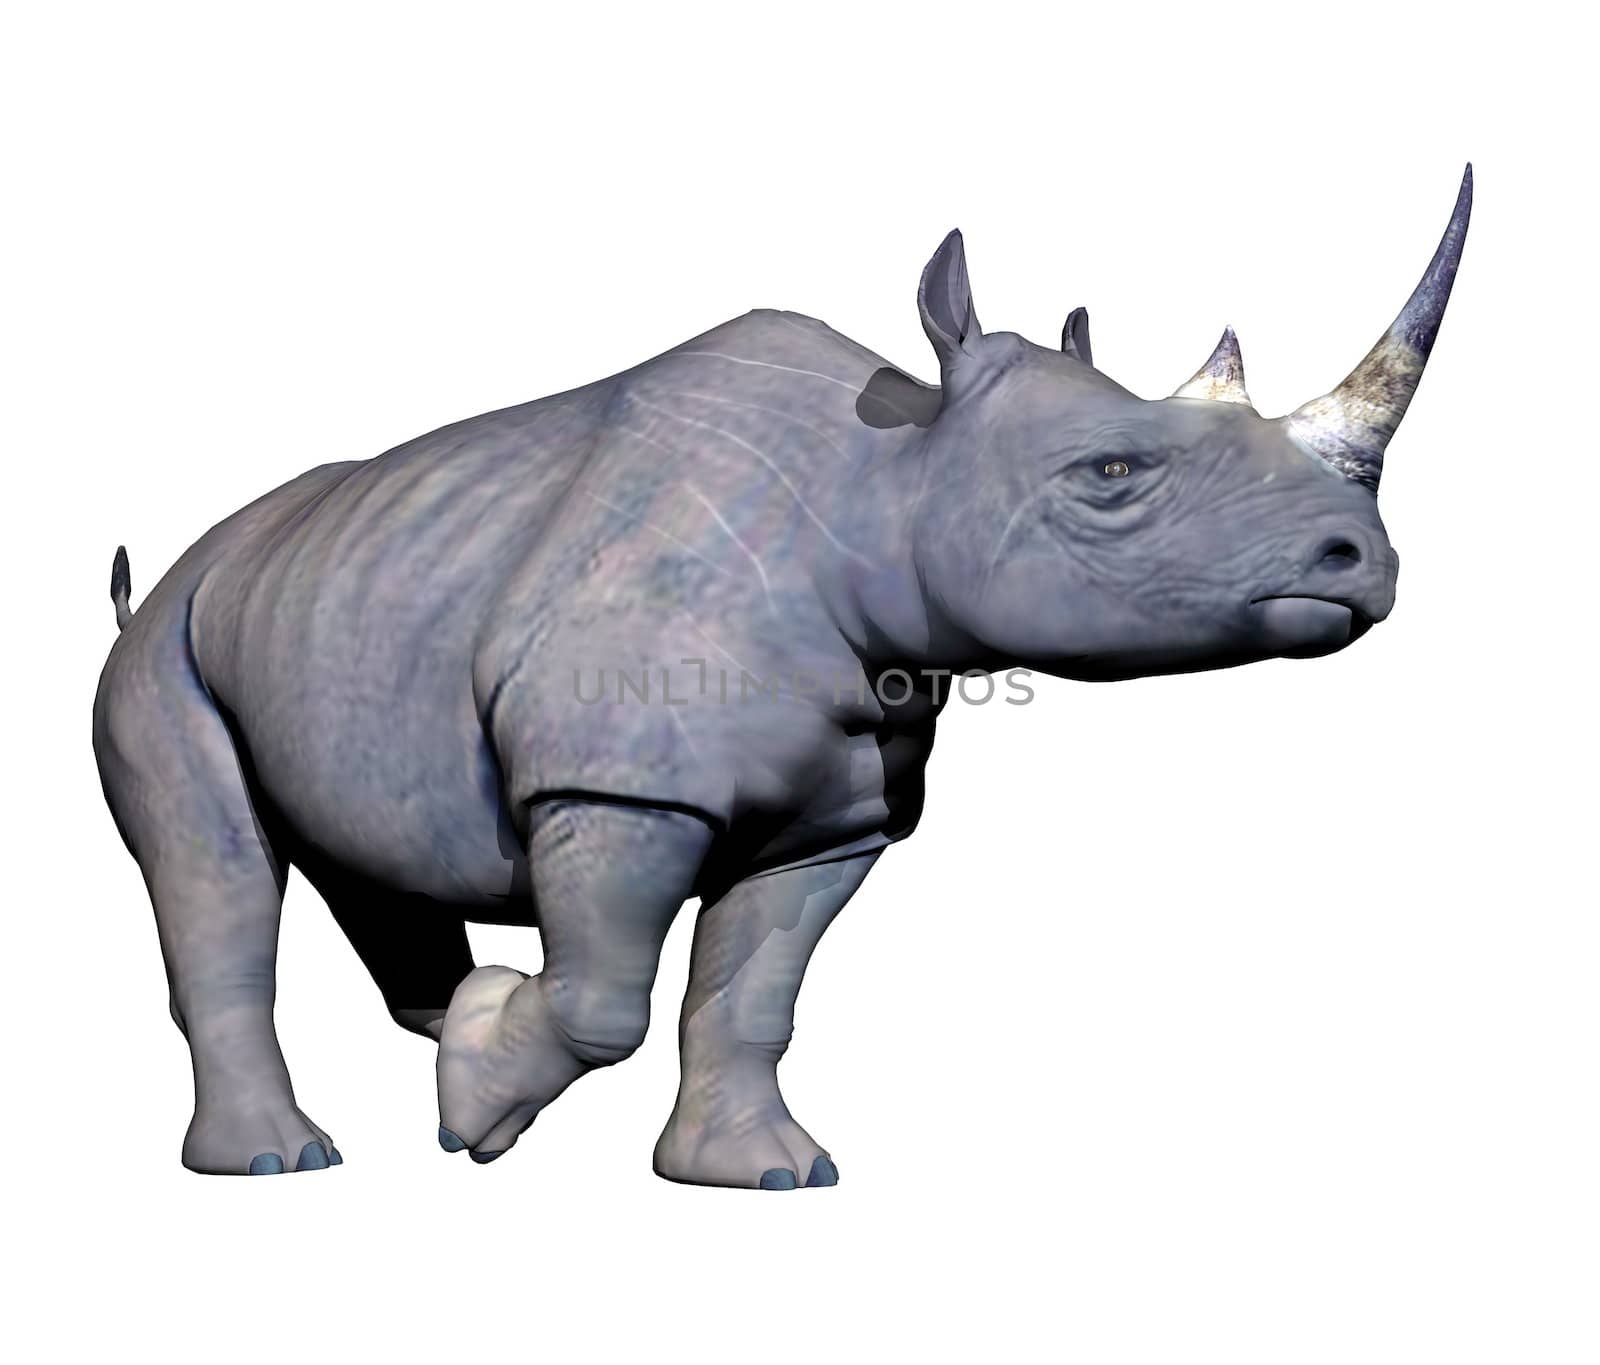 Grey rhinoceros running in white background